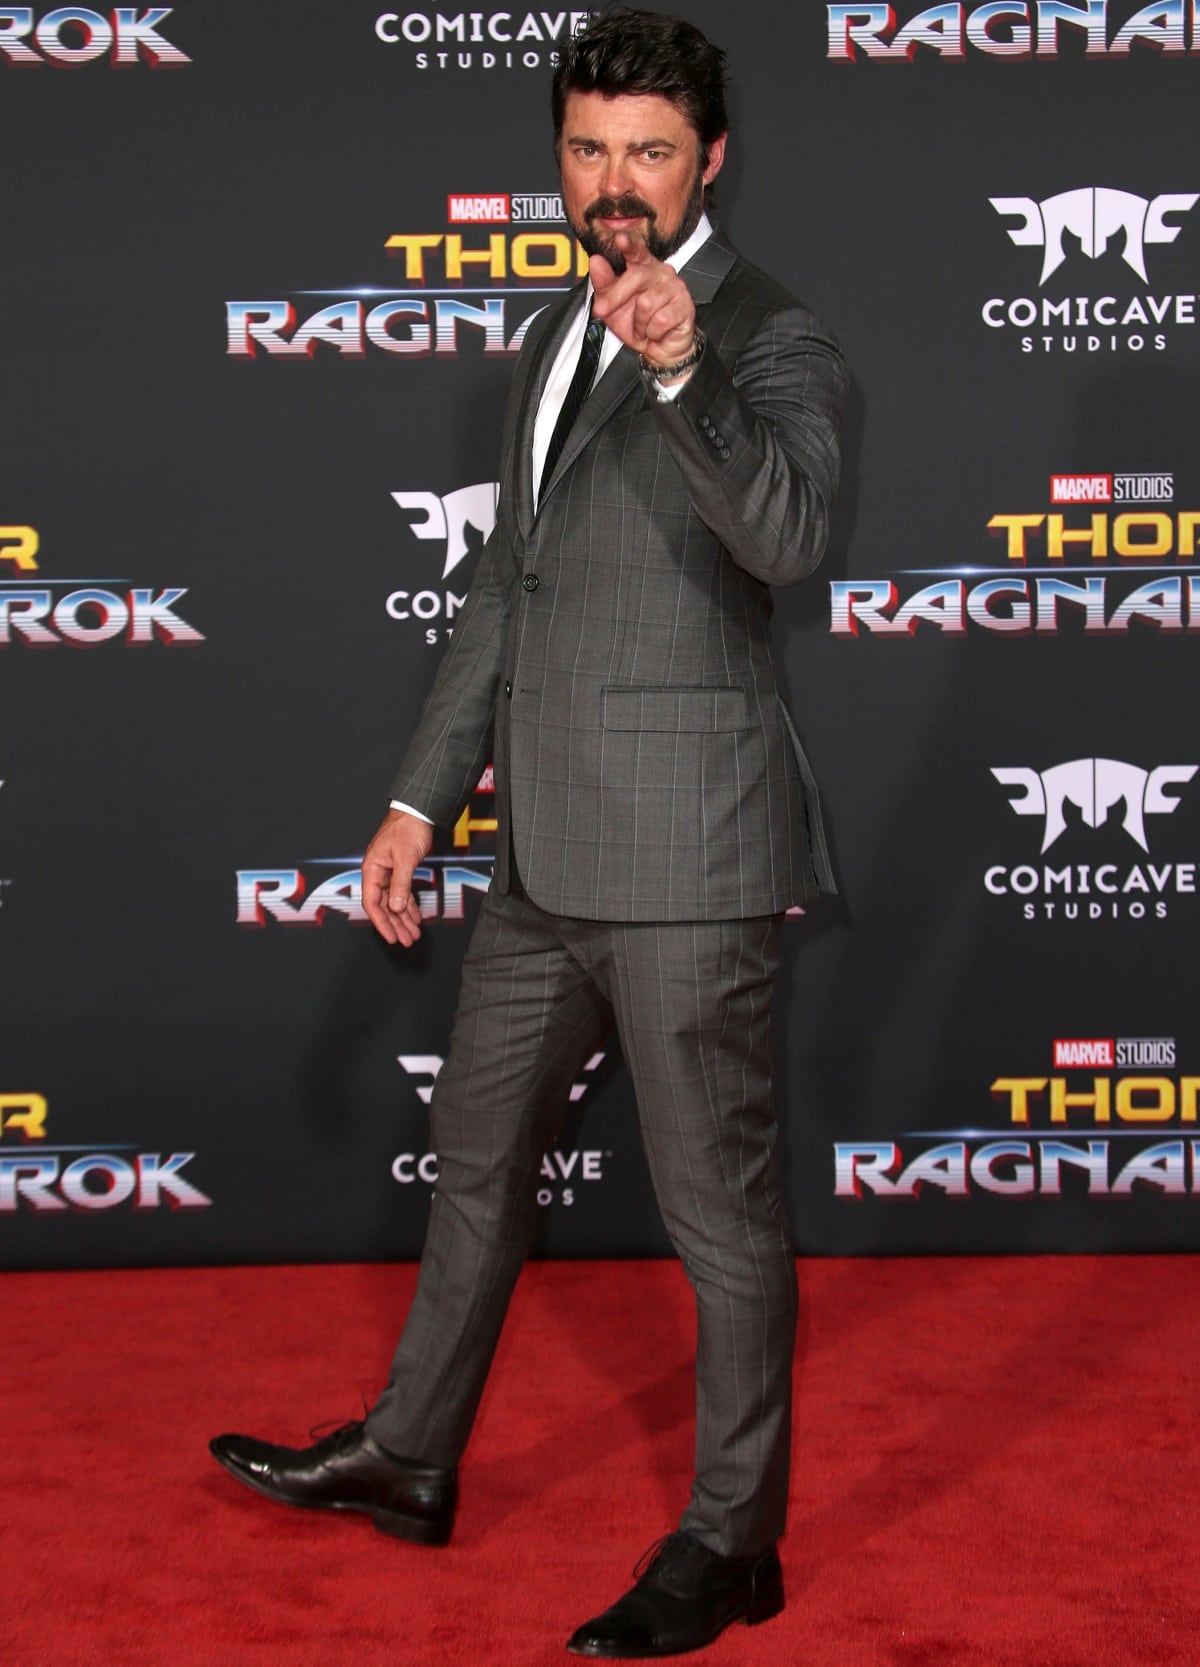 Karl Urban attending the premiere of Thor: Ragnarok